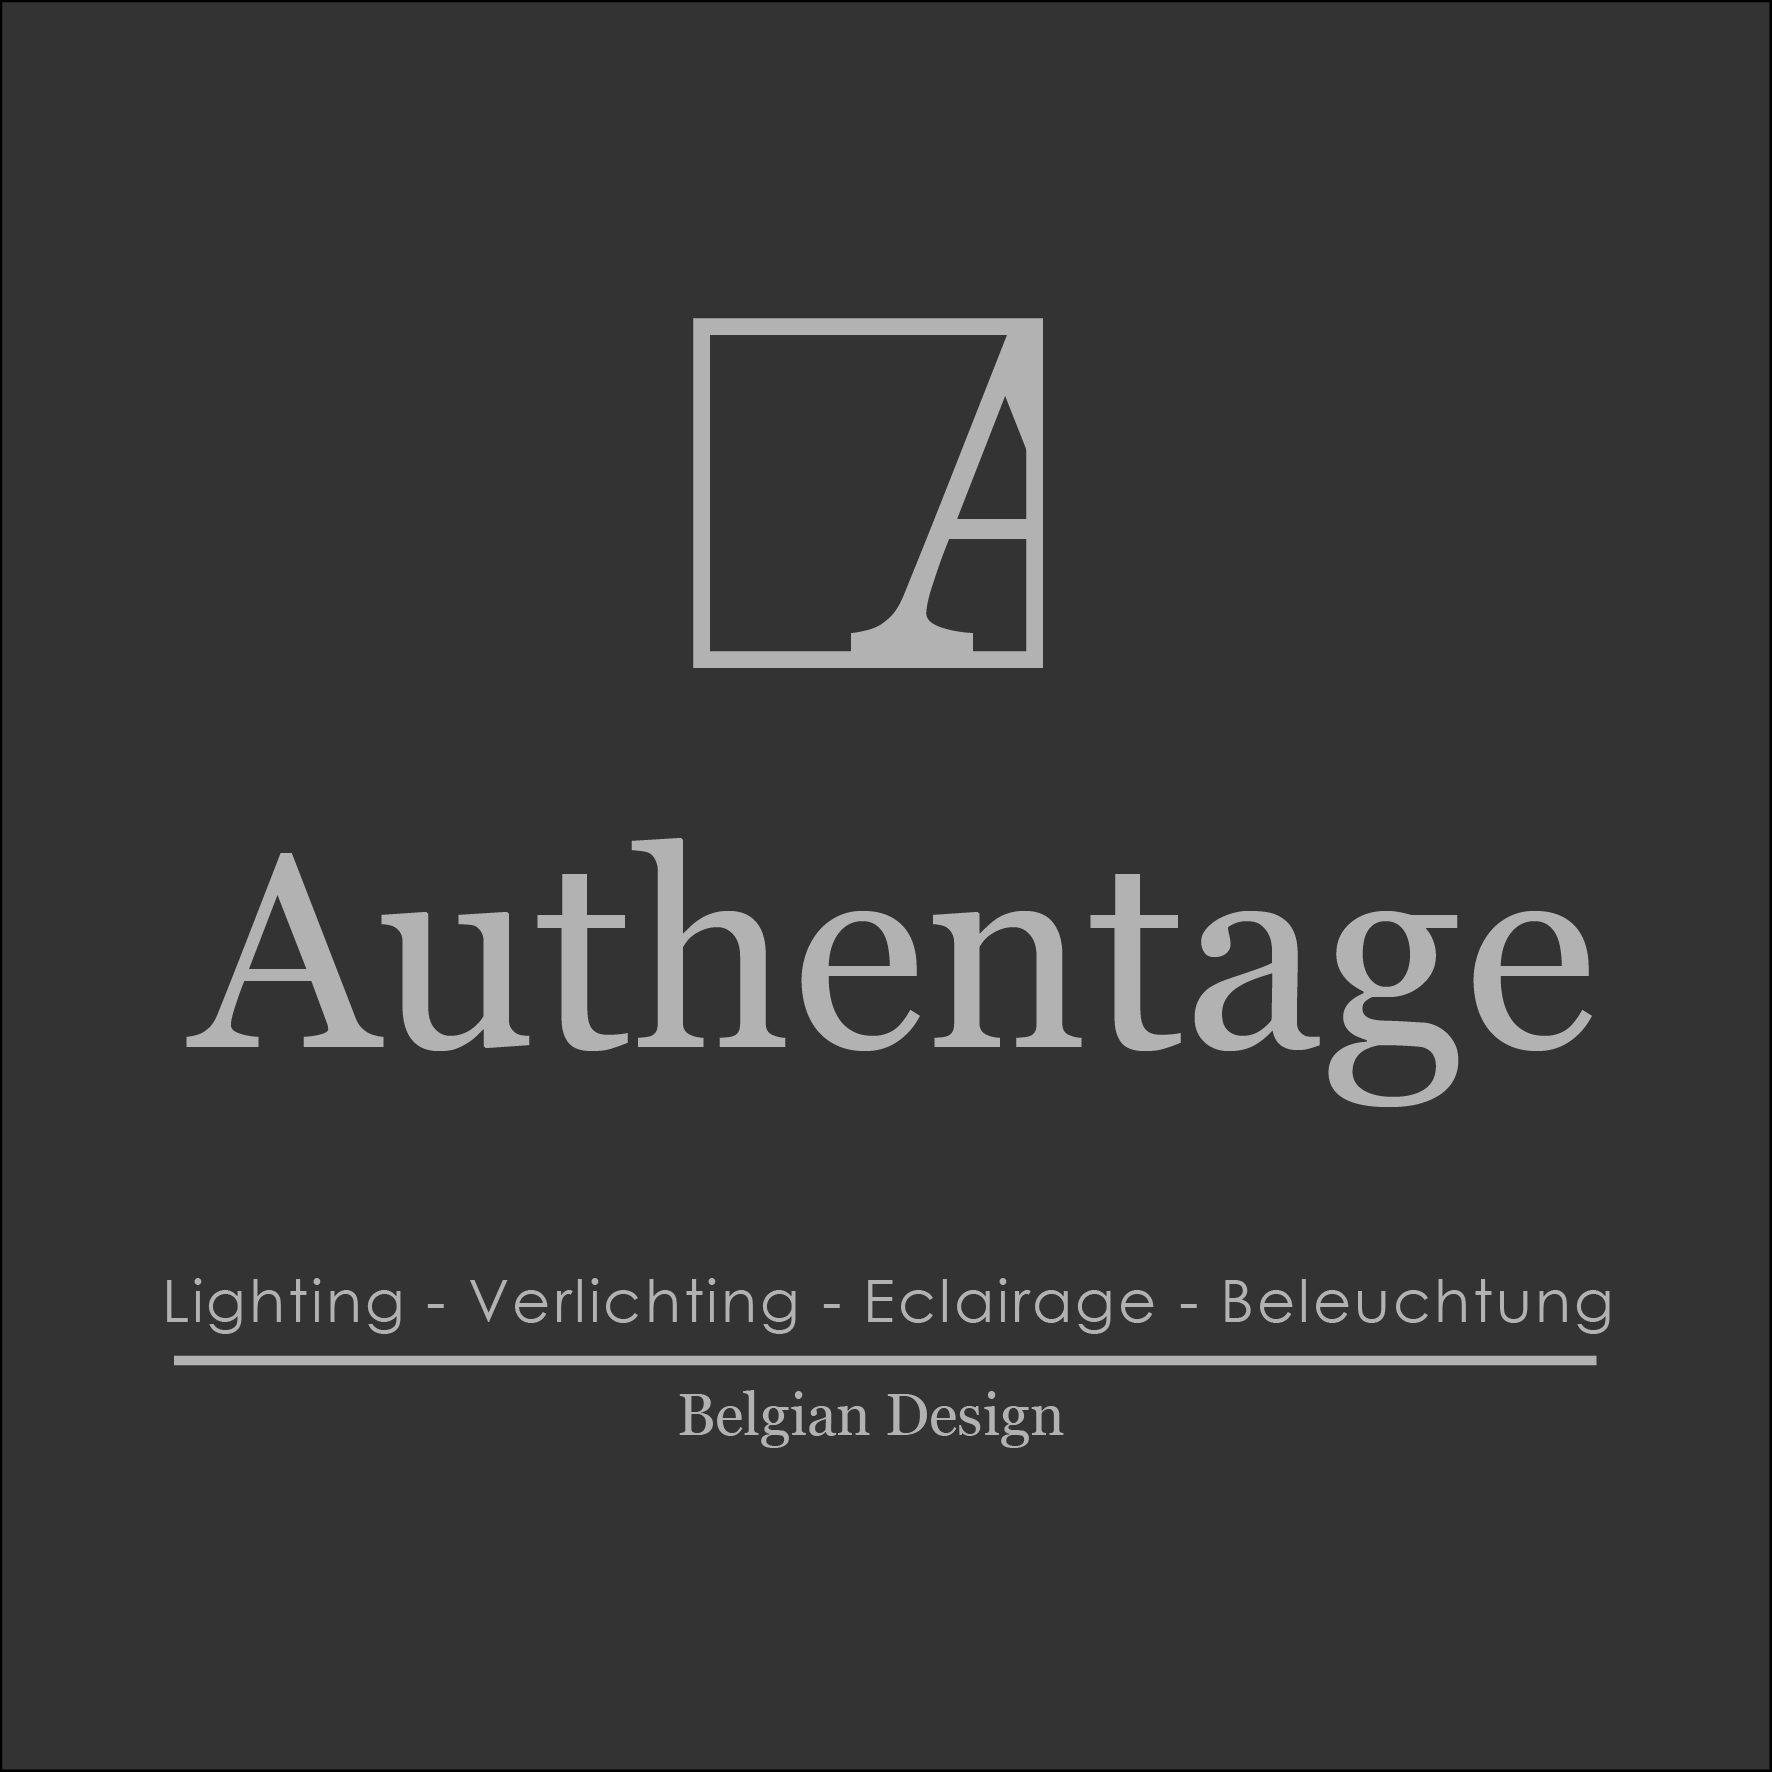 Authentage lighting